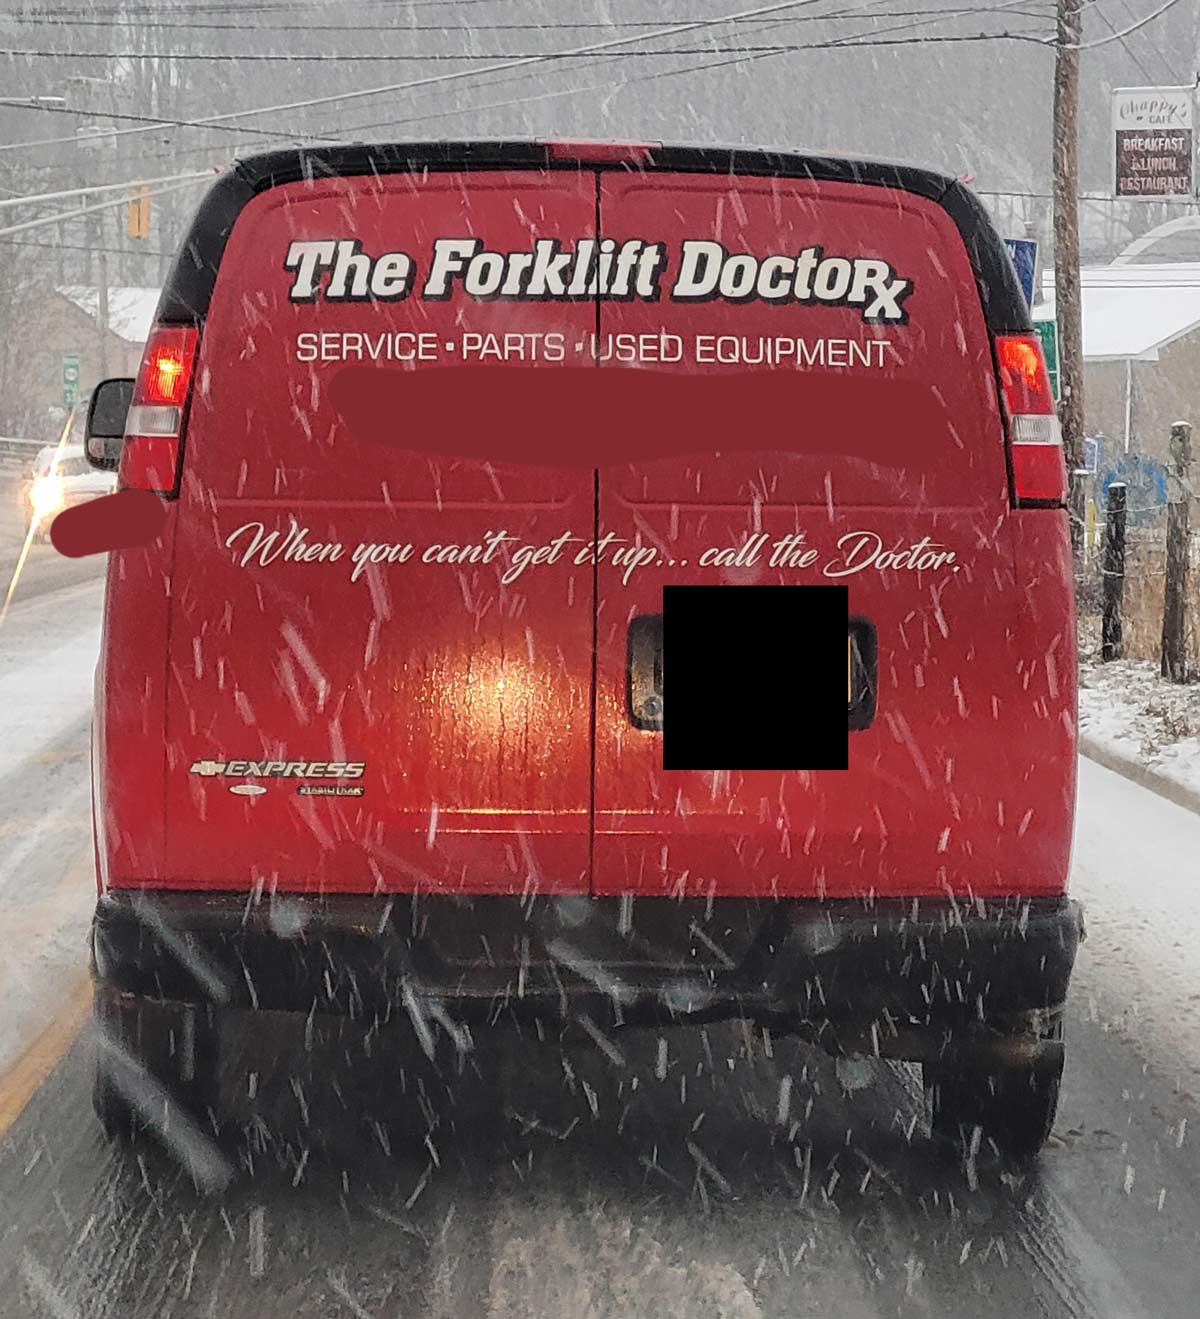 The Forklift Doctor